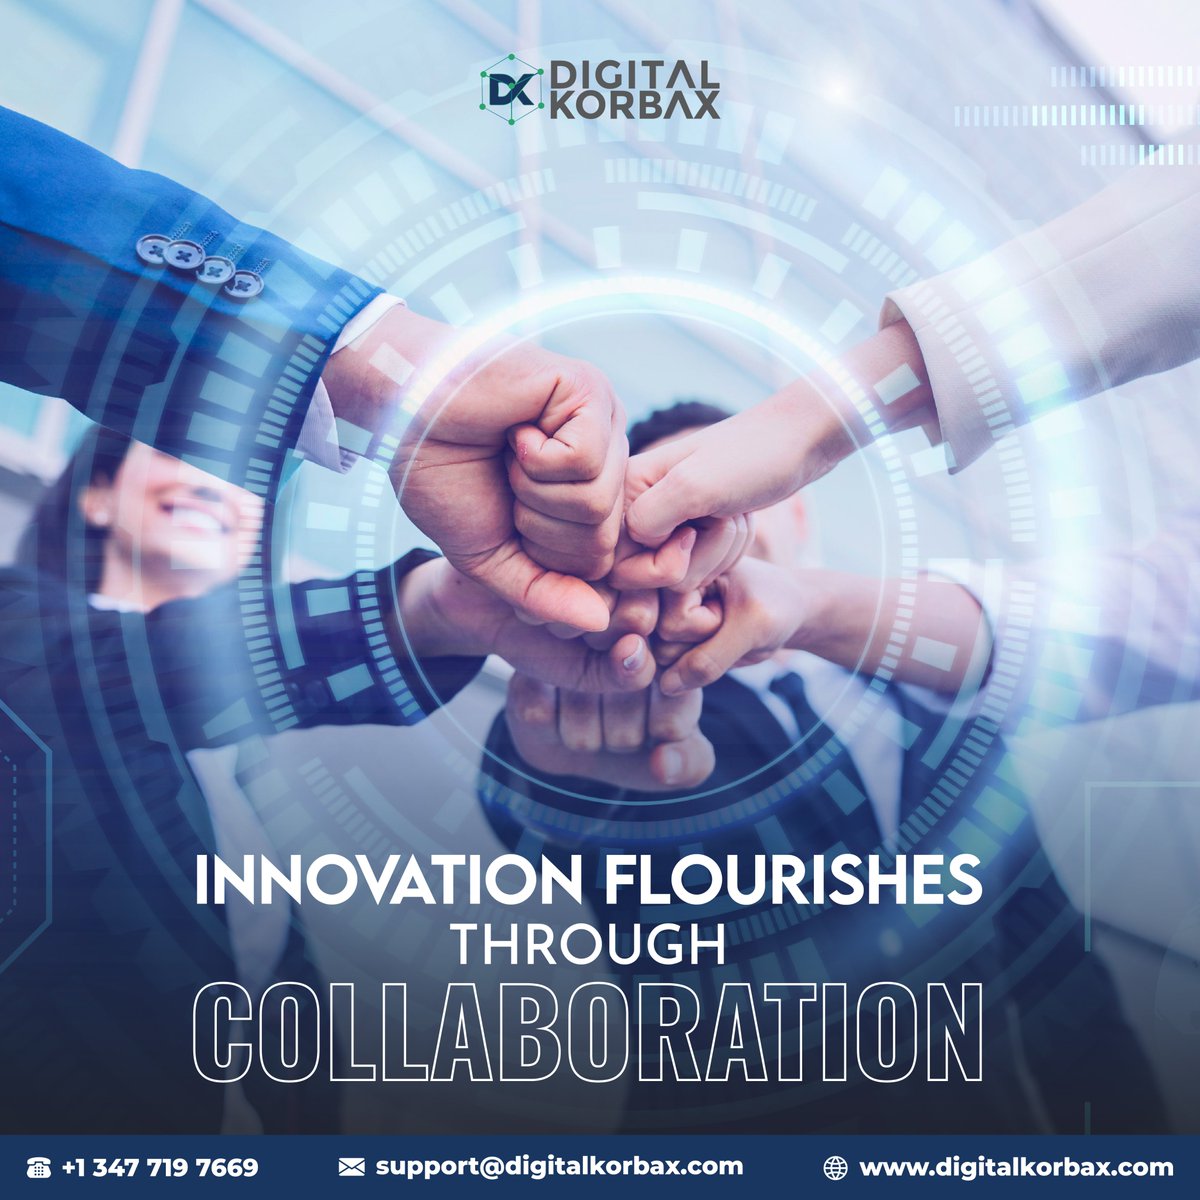 𝑰𝒏𝒏𝒐𝒗𝒂𝒕𝒊𝒐𝒏 𝒇𝒍𝒐𝒖𝒓𝒊𝒔𝒉𝒆𝒔 𝒕𝒉𝒓𝒐𝒖𝒈𝒉 𝒄𝒐𝒍𝒍𝒂𝒃𝒐𝒓𝒂𝒕𝒊𝒐𝒏

#InnovationFlourishes #CollaborationNation #InnovationThroughCollaboration #CollaborativeInnovation #CollaborativeSuccess #CollaborativeGrowth #InnovateTogether #CollaborativeIdeas #Teamwork